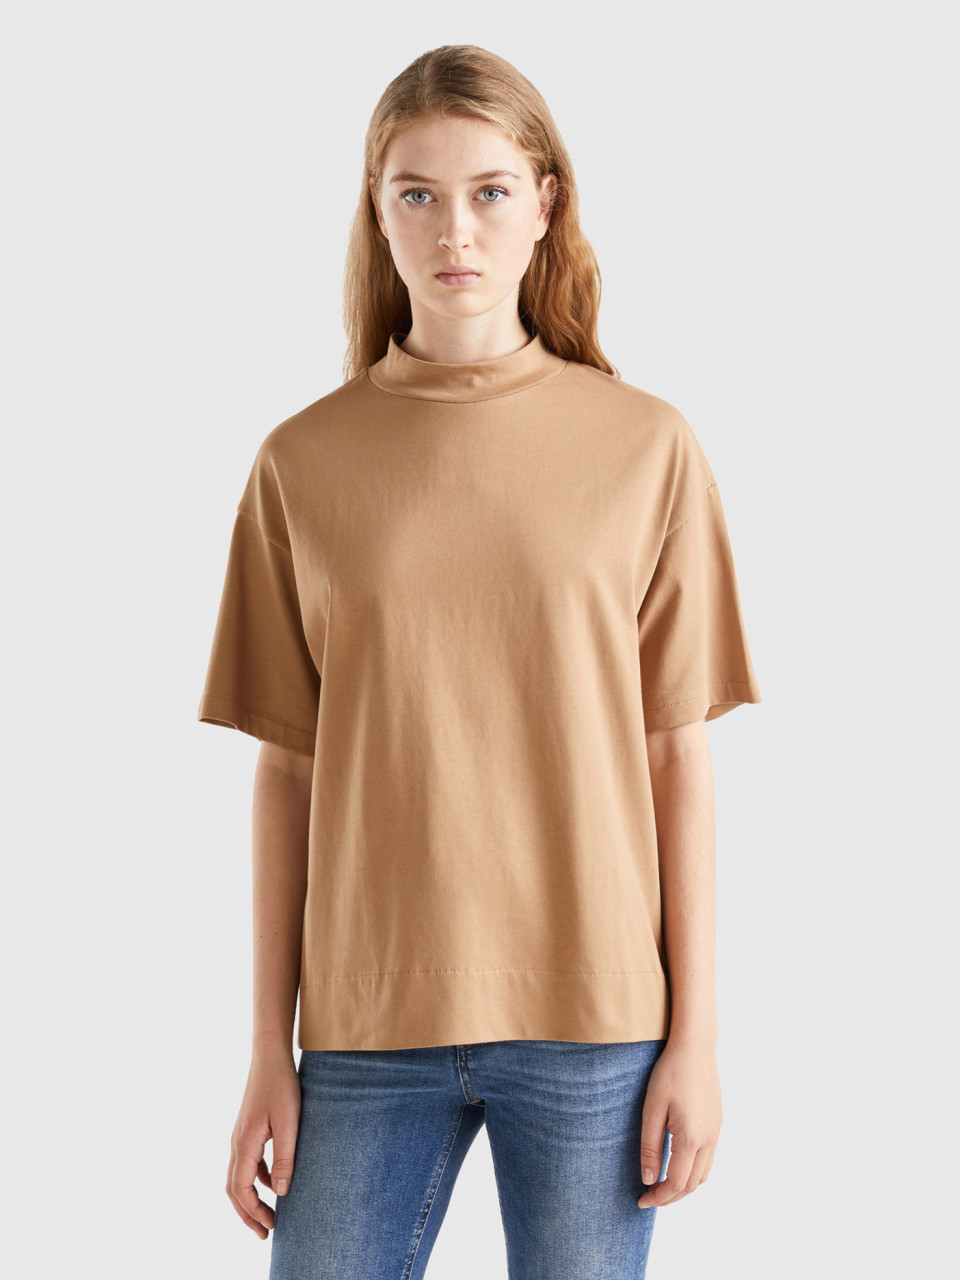 Benetton, T-shirt With Standing Neck, Camel, Women